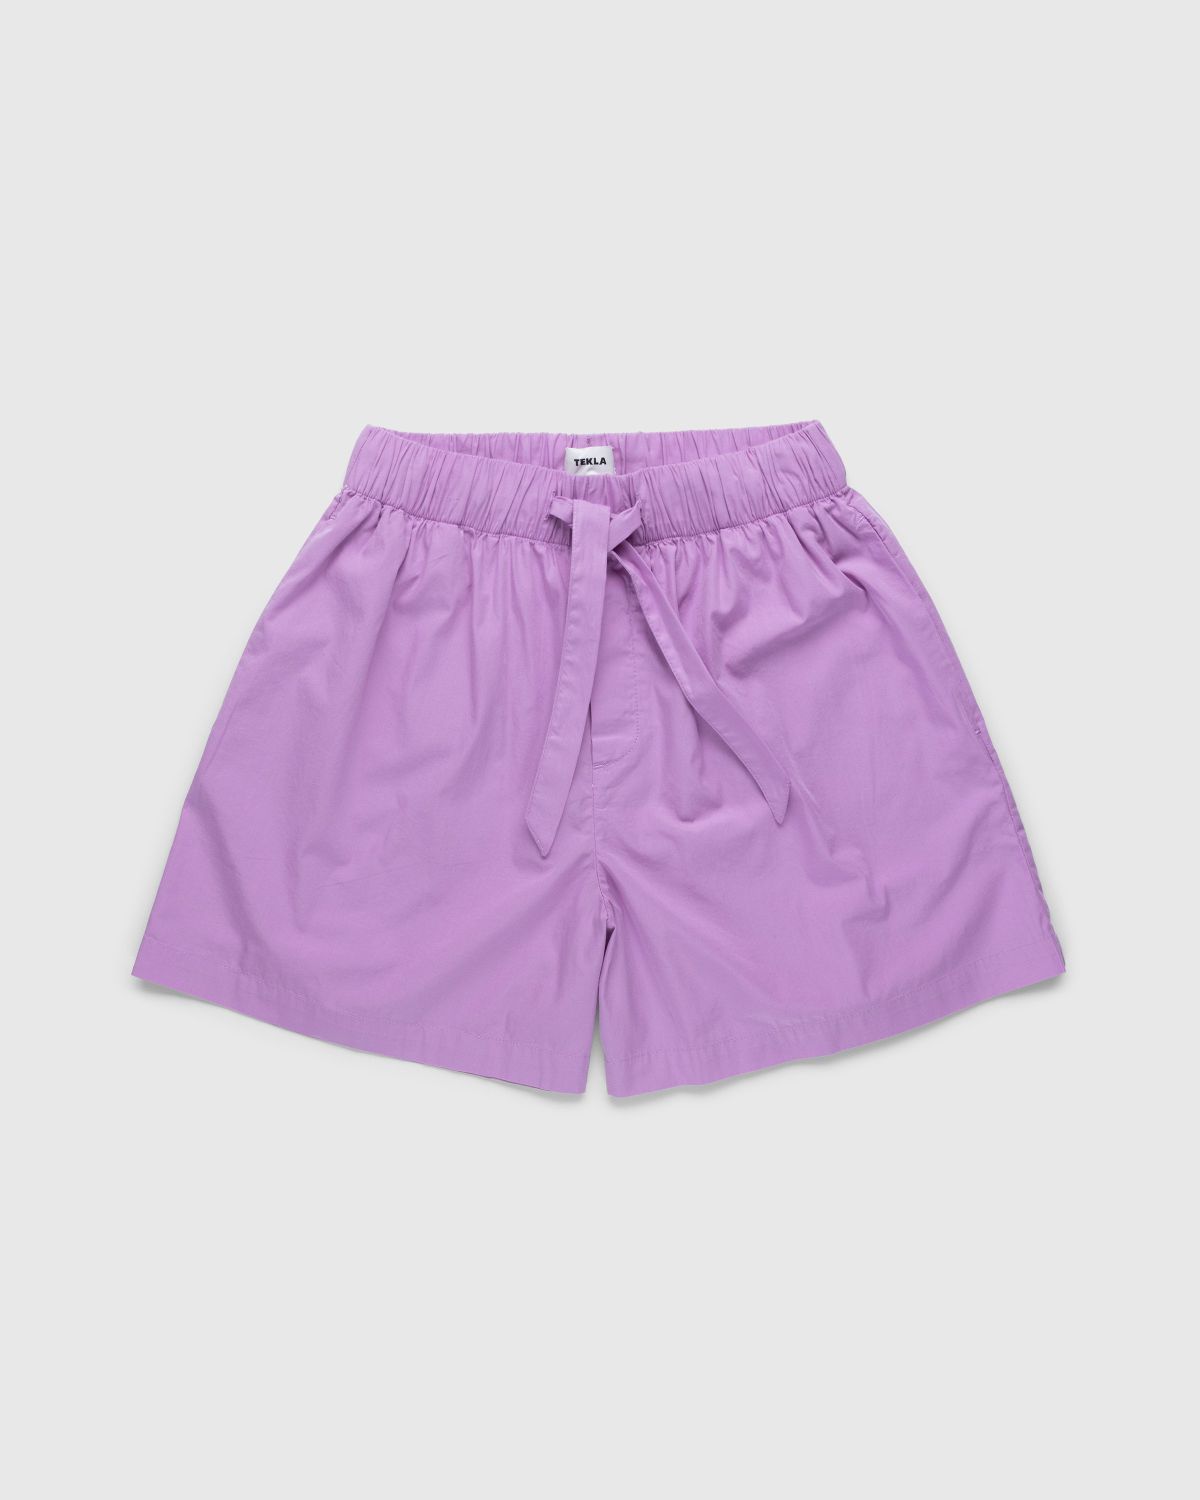 Tekla – Cotton Poplin Pyjamas Shorts Purple Pink | Highsnobiety Shop